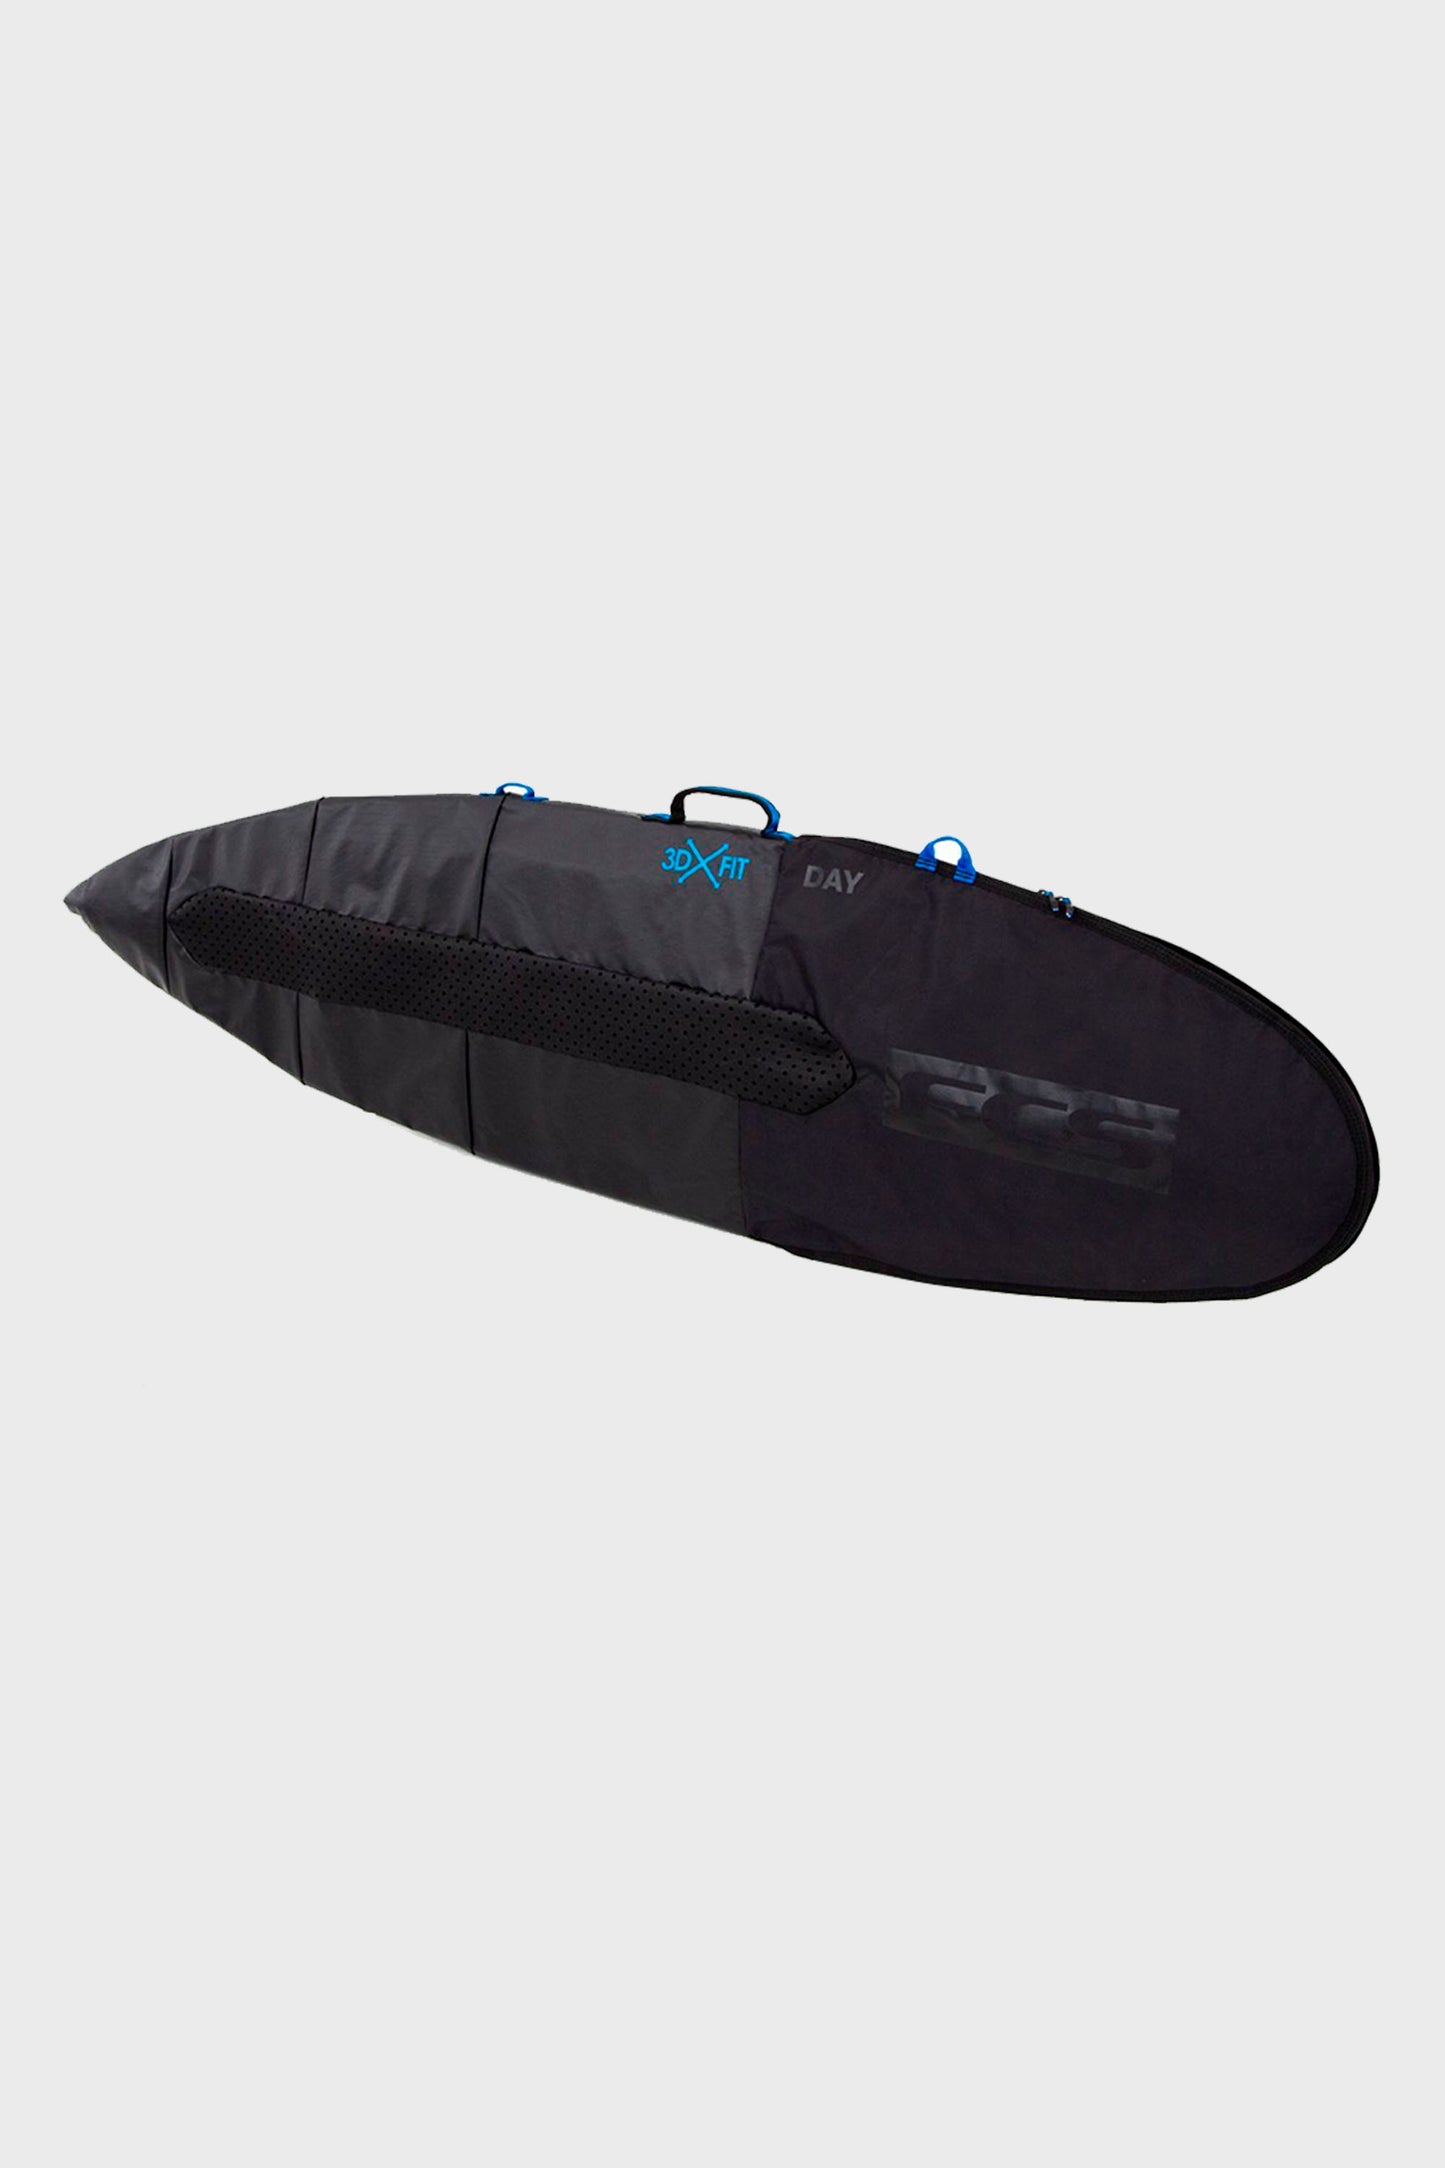    Pukas-Surf-Shop-FCS-Boardbags-Day-all-purpose-5.9